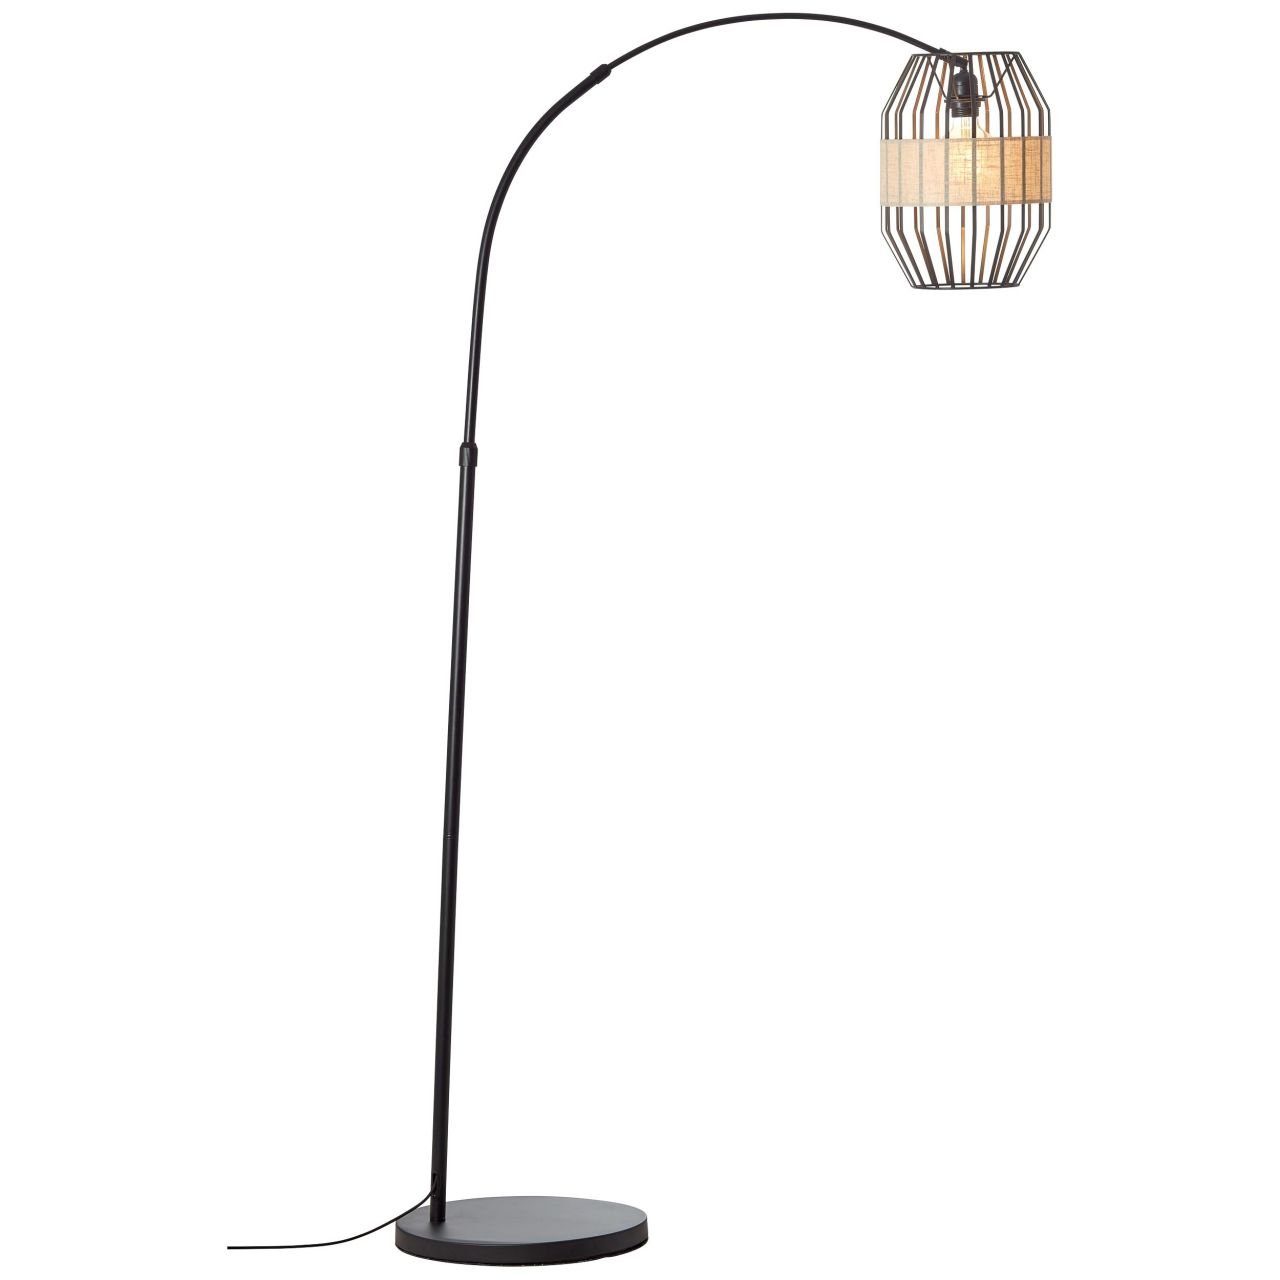 Brilliant Stehlampe Slope, Slope Bogenstandleuchte 1,5m schwarz/natur 1x A60, E27, 52W, geeigne | Bogenlampen